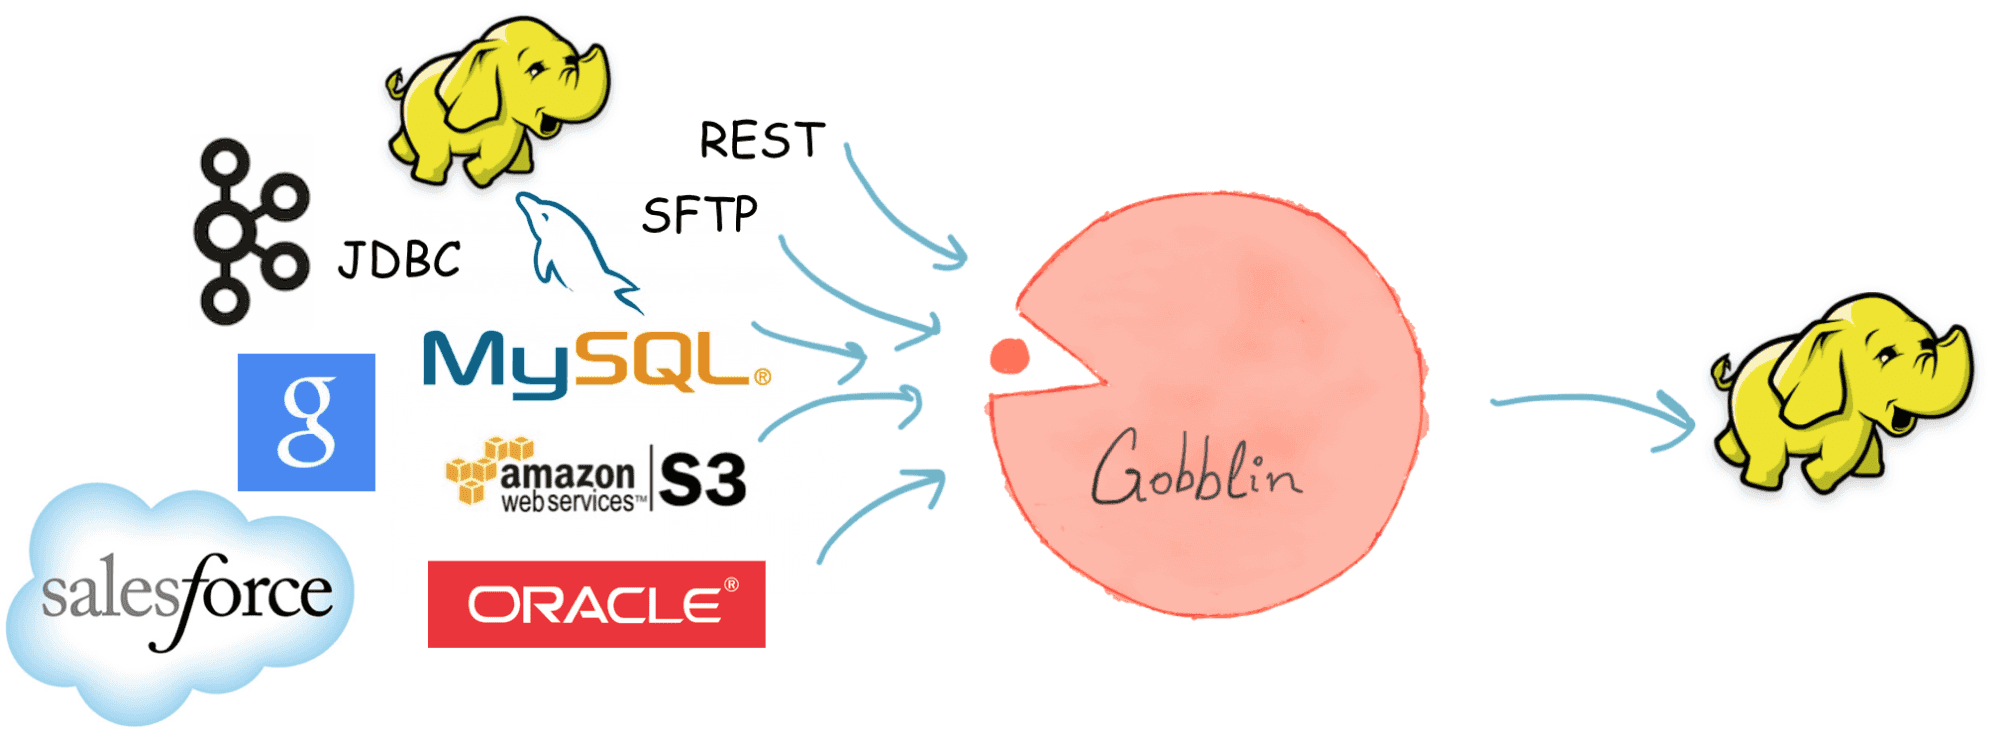 gobblin-ingest-ecosystem